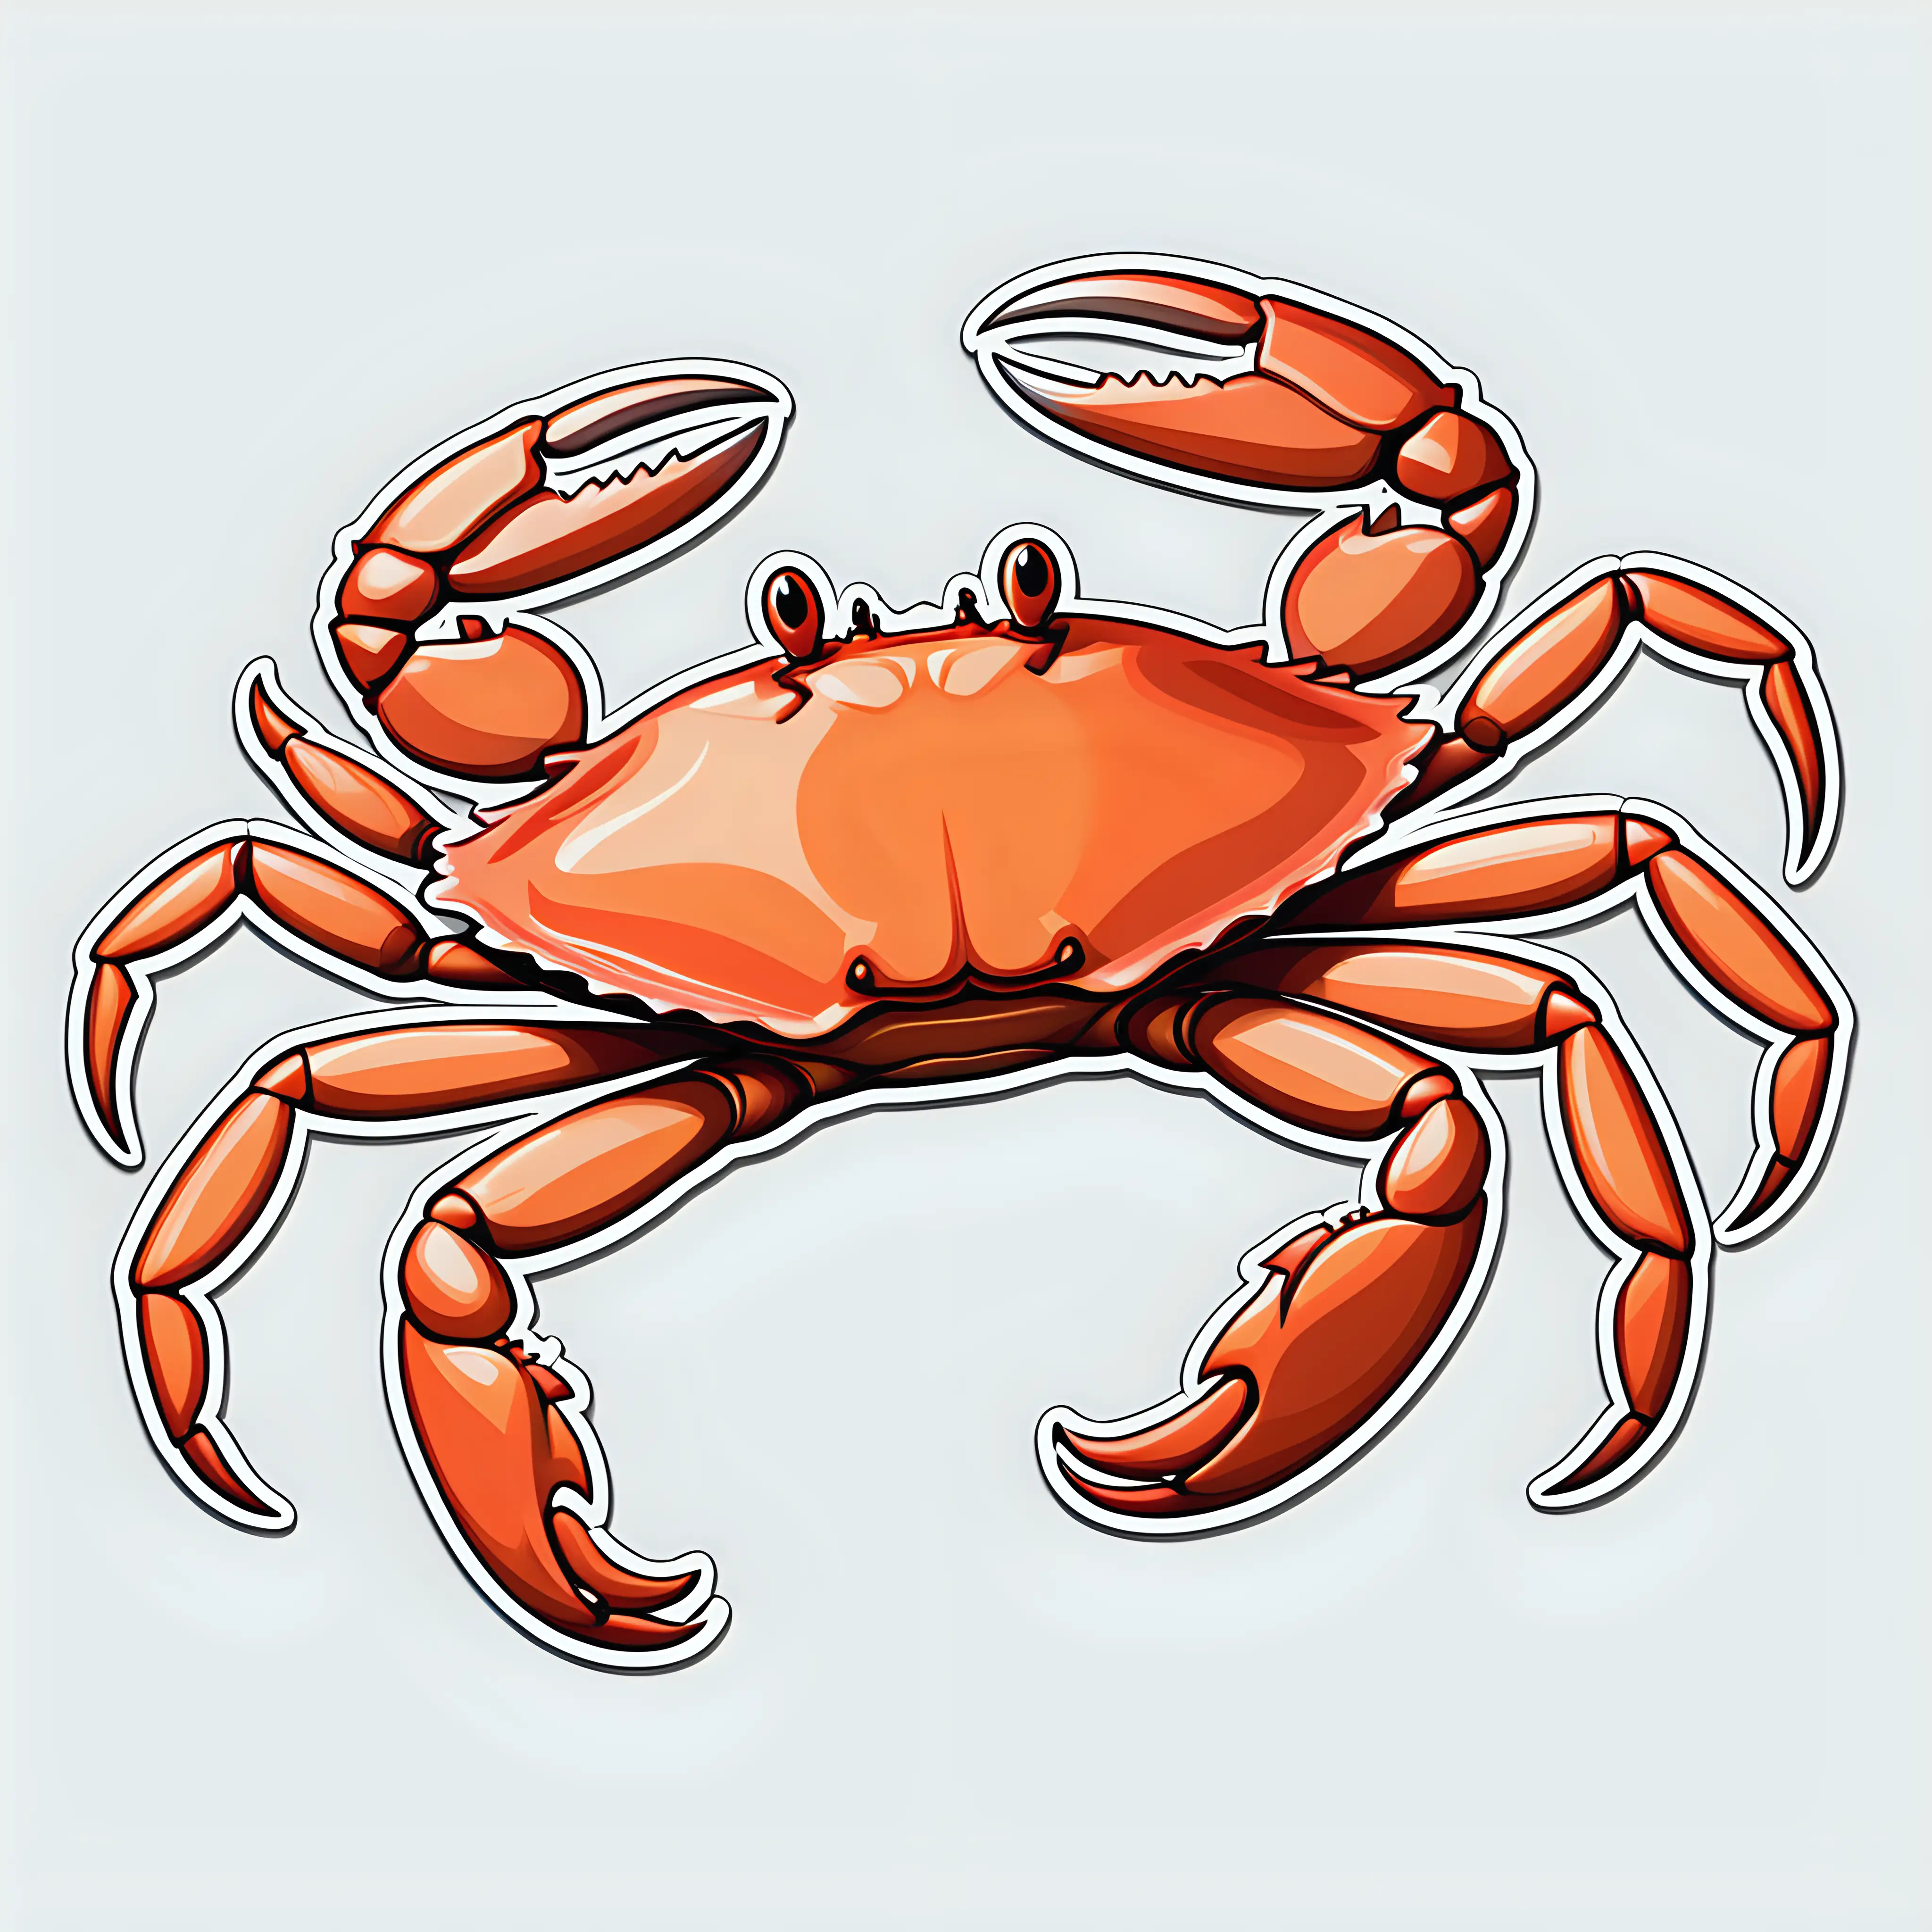 Raw Style Crab Full Body Vector Art Sticker on White Background